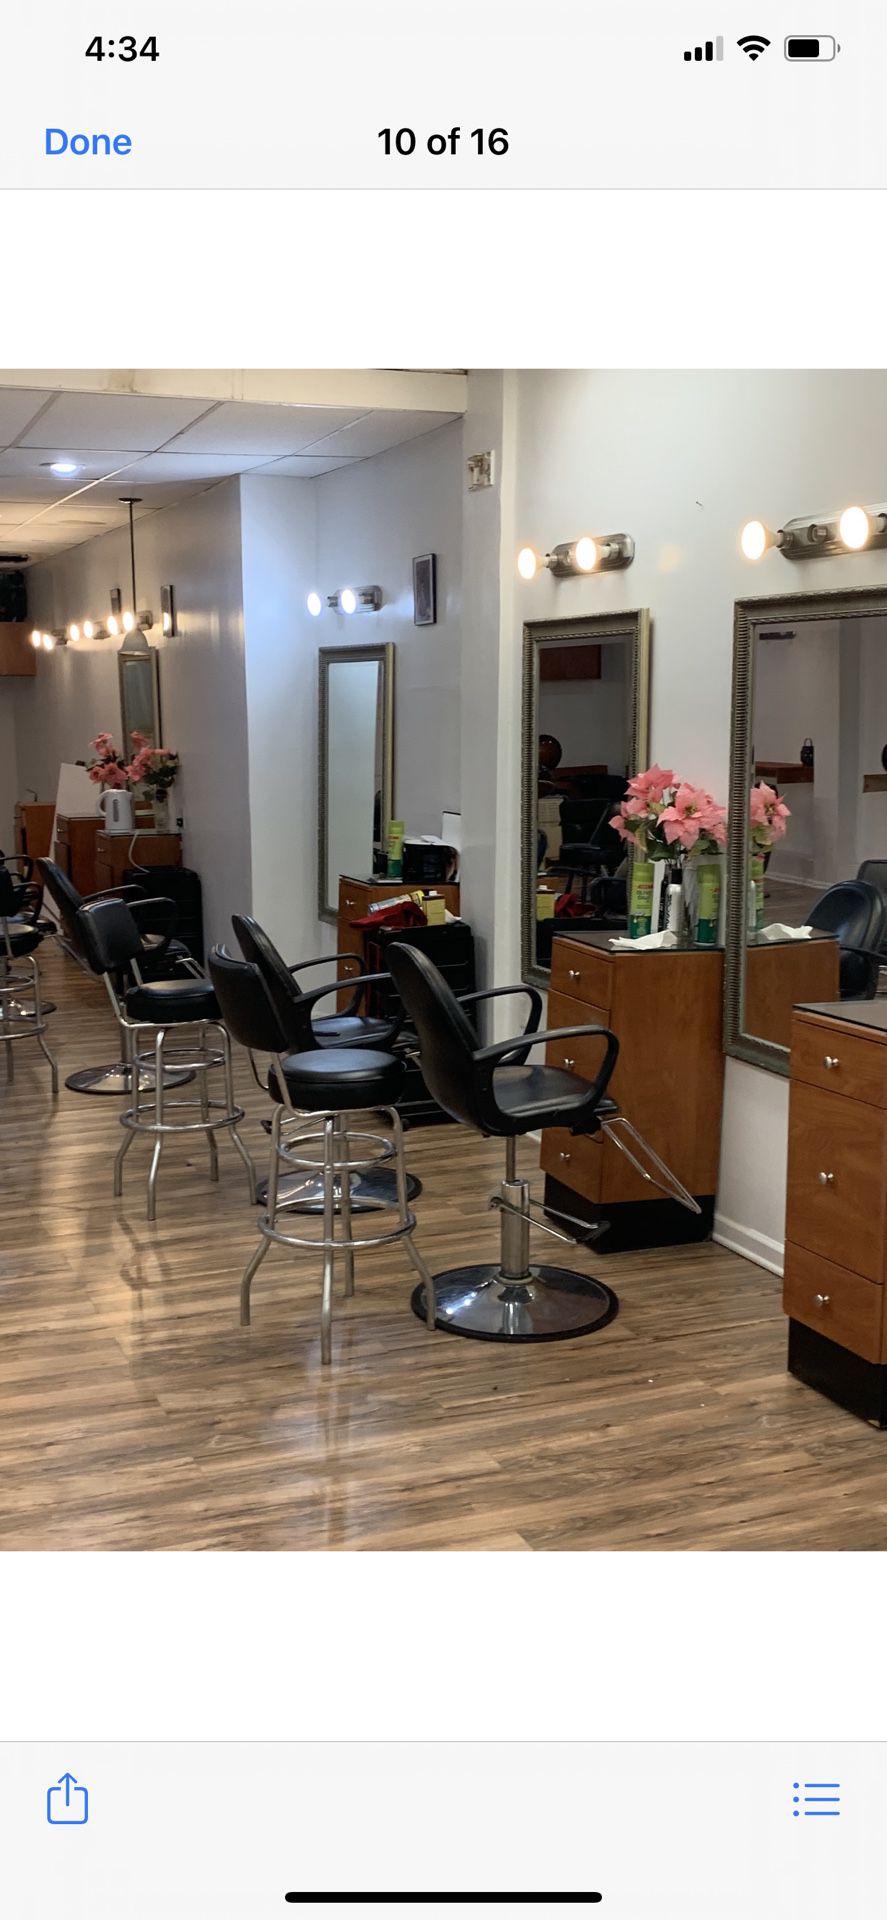 Complete beauty salon set